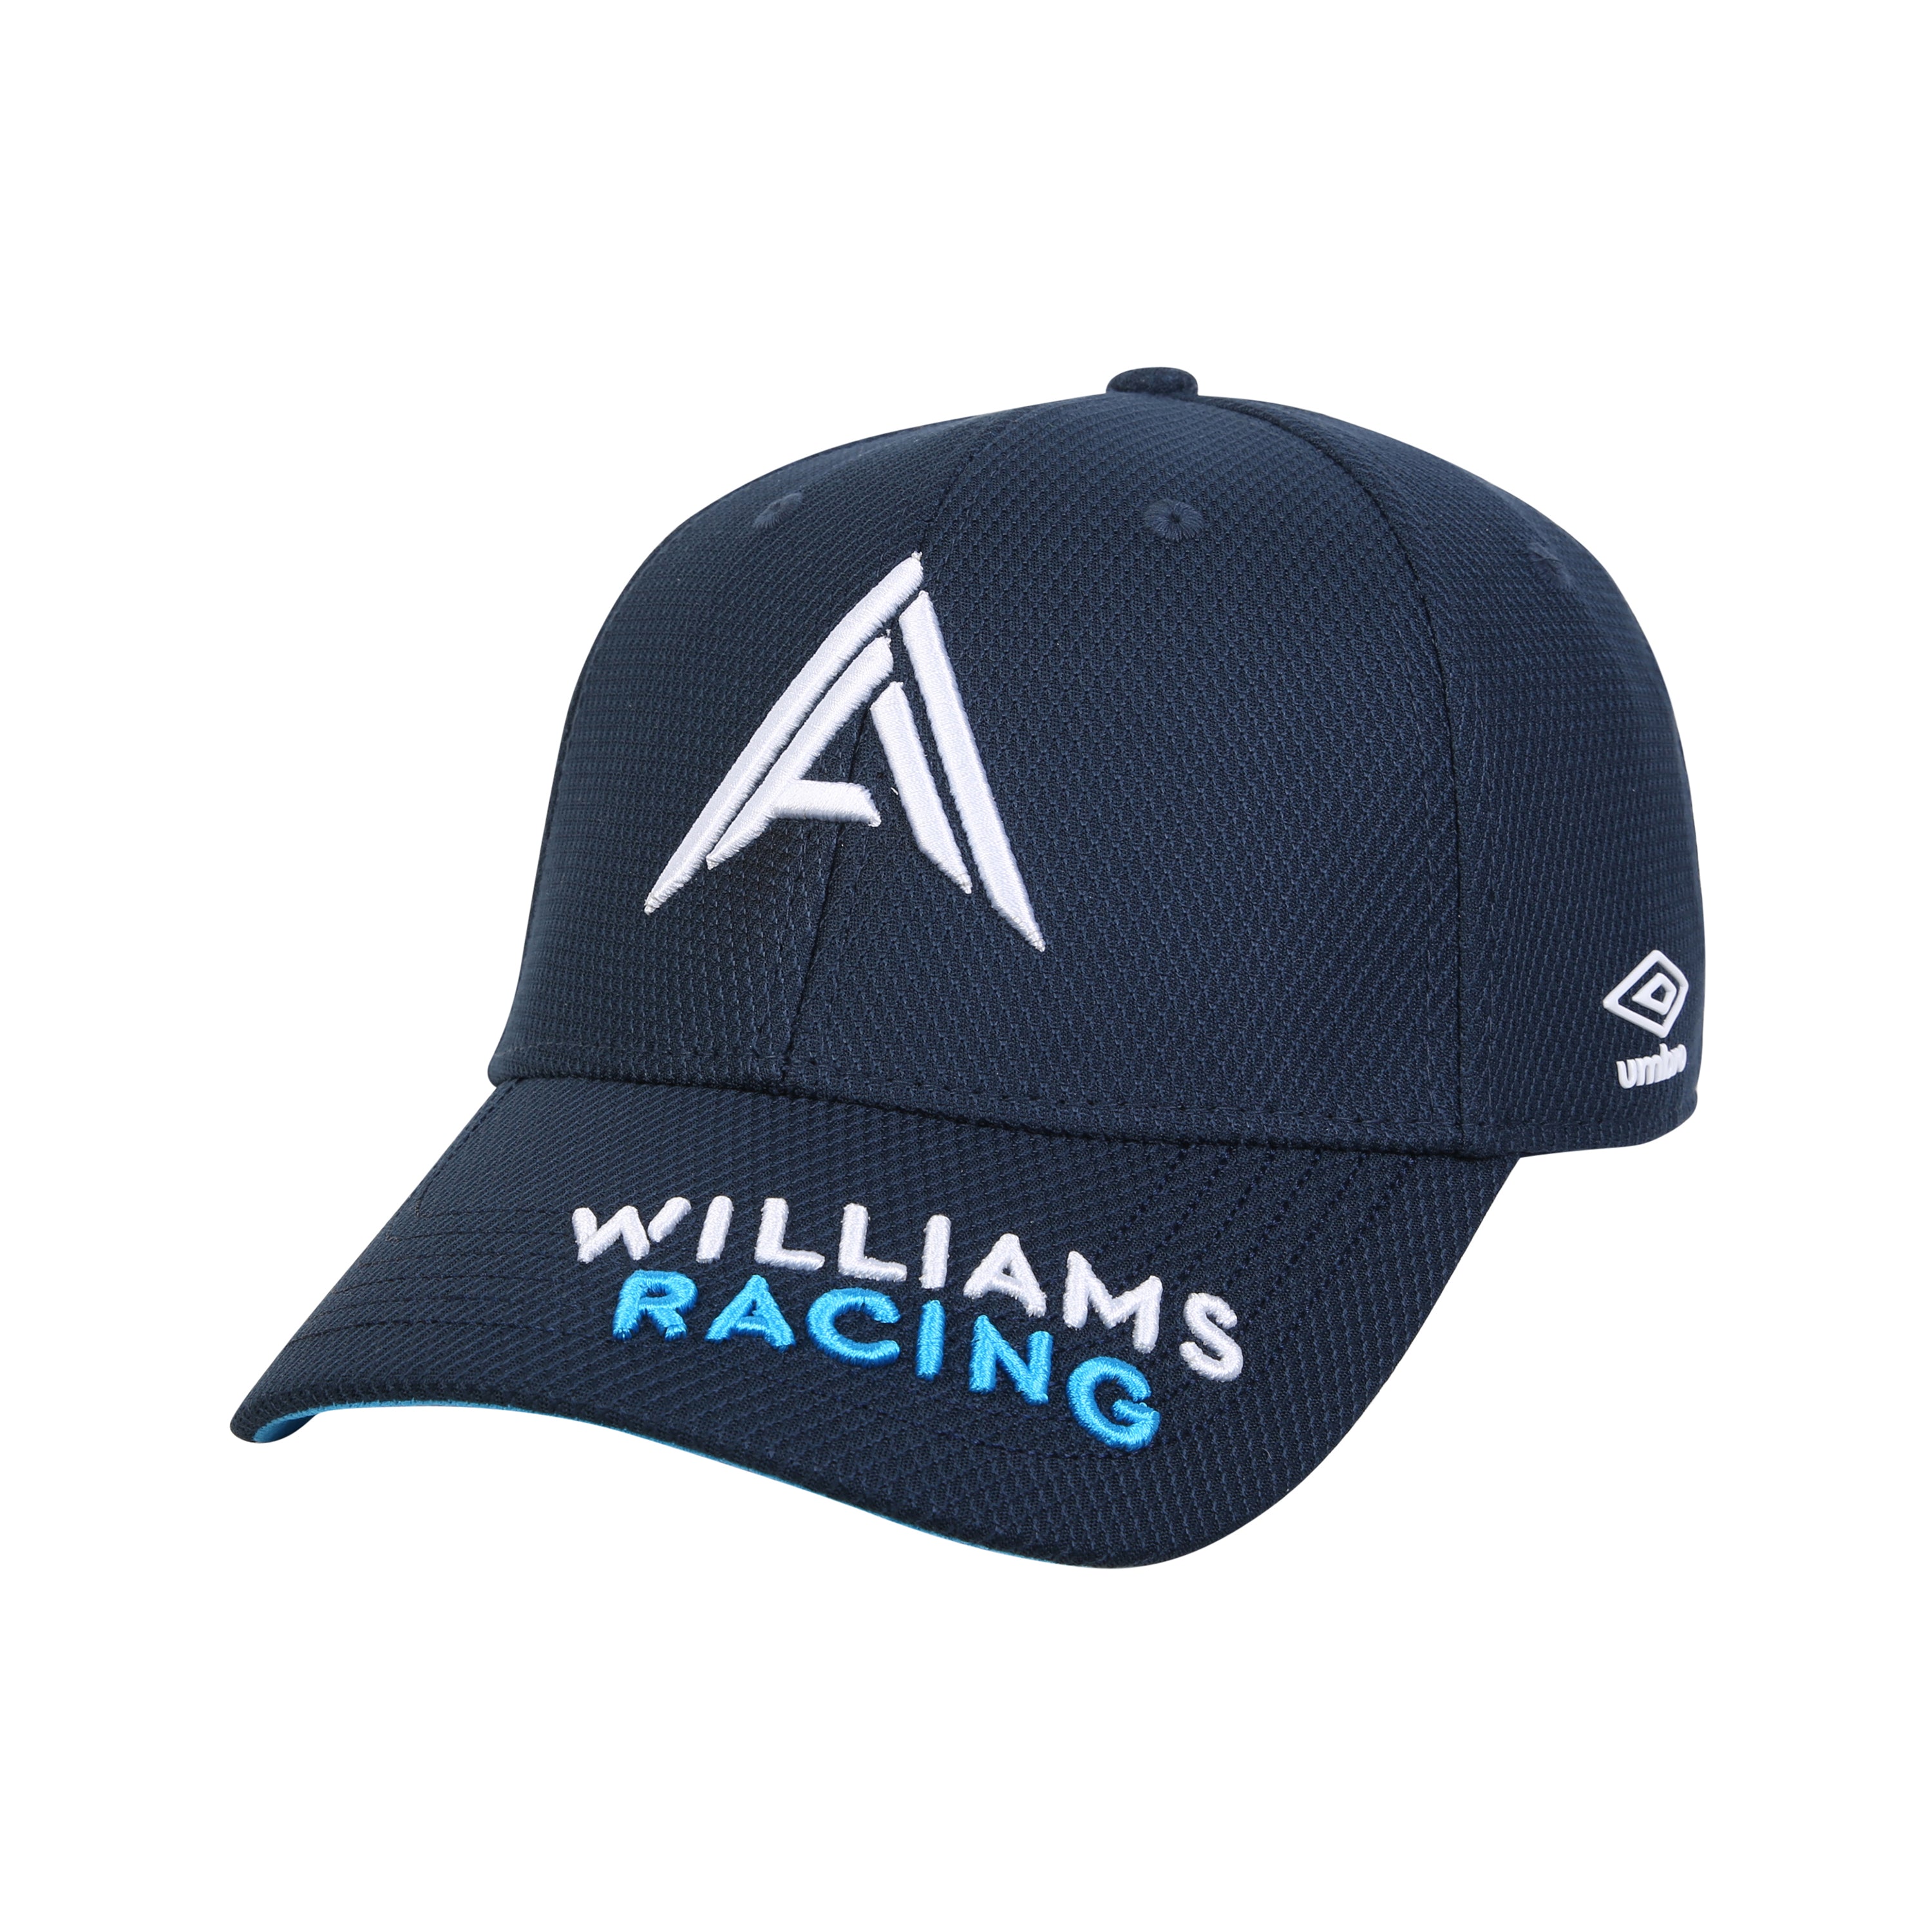 Williams Racing Team Alex Albon Driver Cap Blue